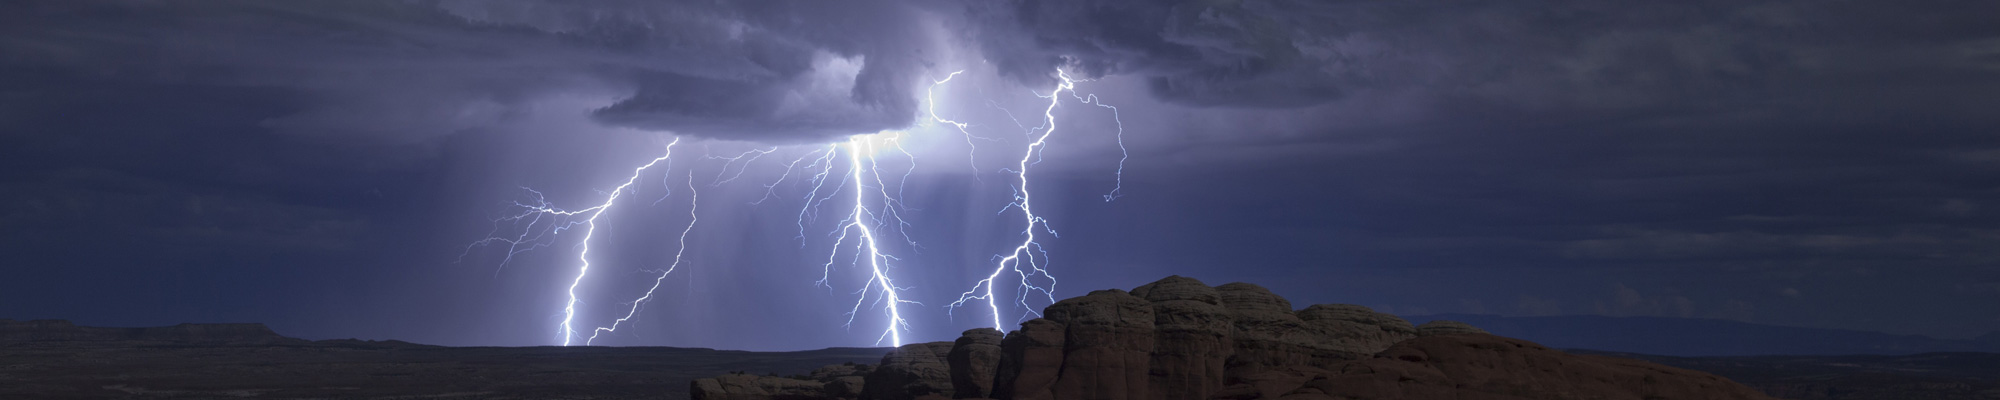 image of lightning strikes